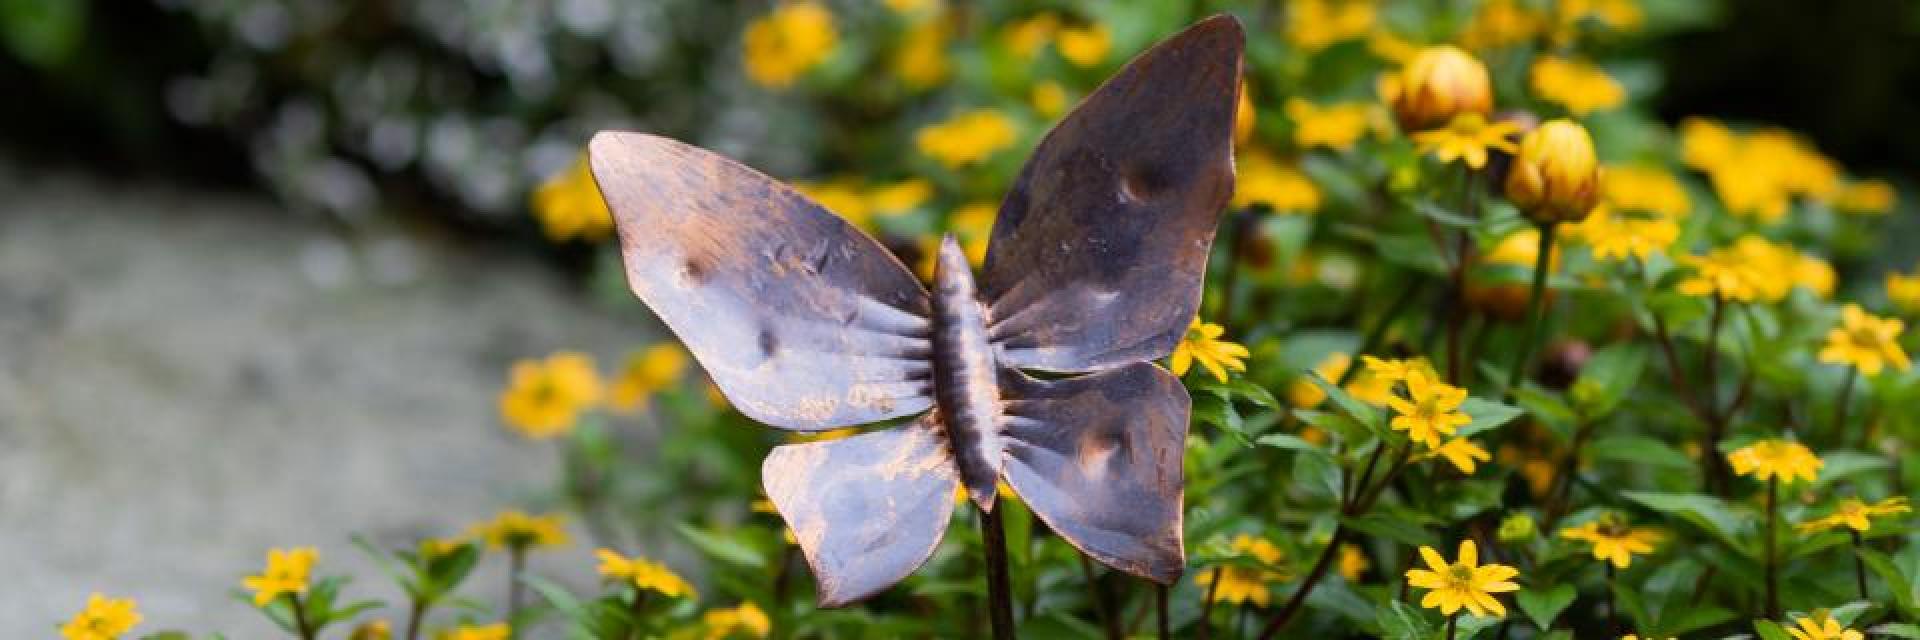 Symbolbild Schmetterling